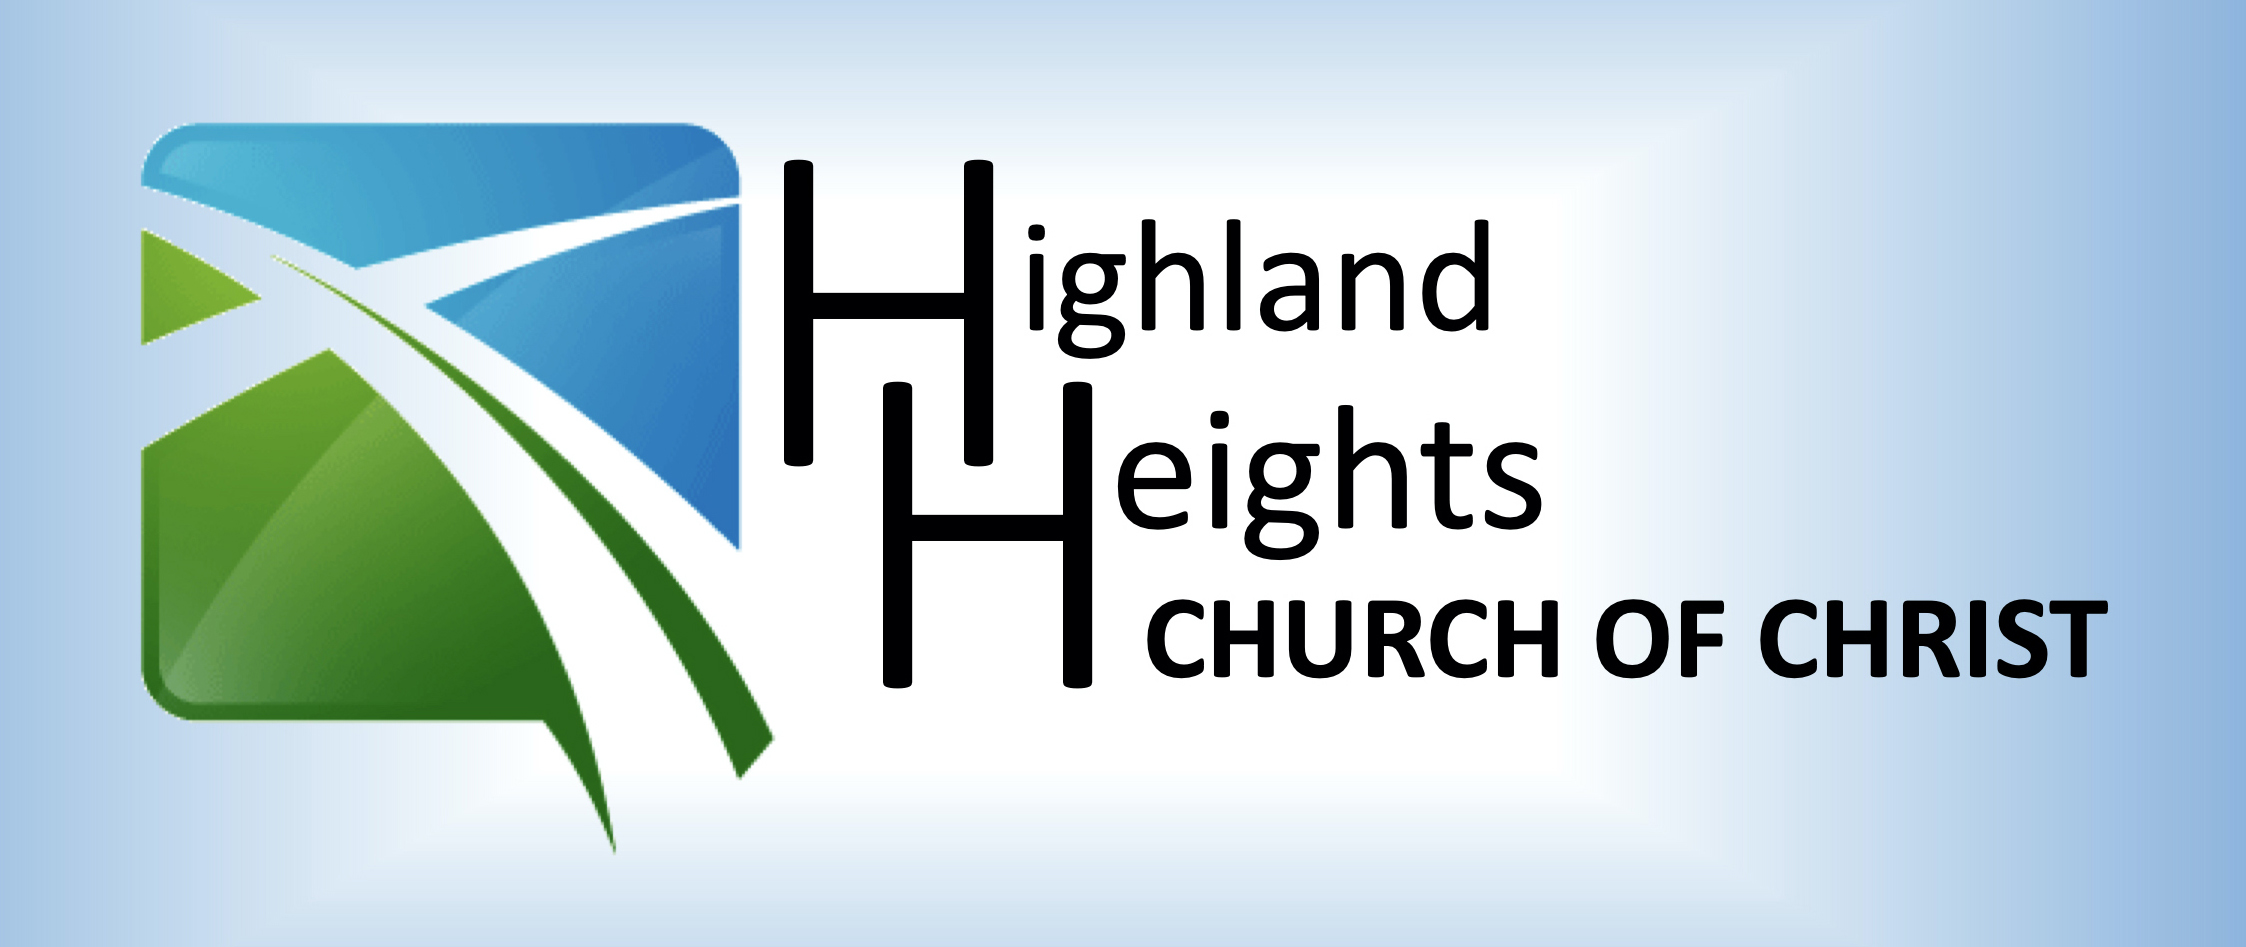 Highland Heights Church of Christ Lebanon TN